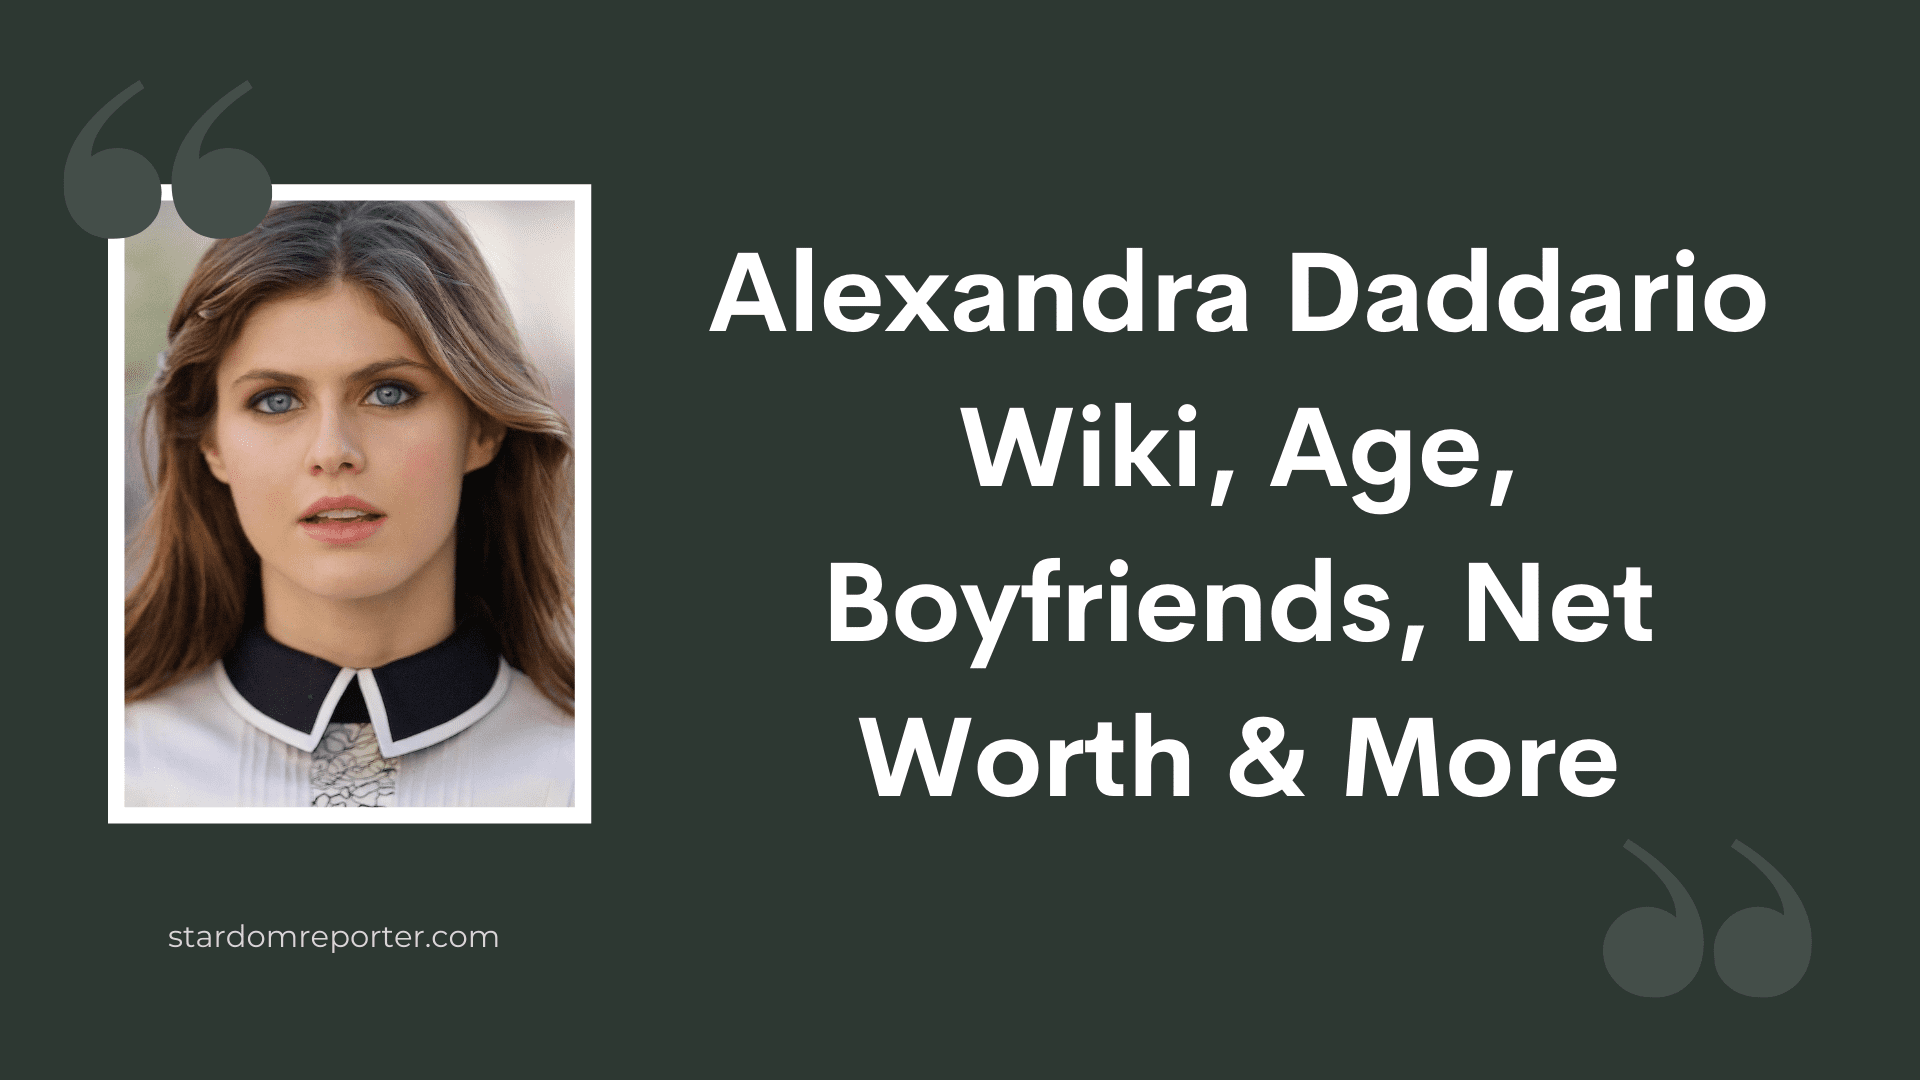 Alexandra Daddario Wiki Age Boyfriends Net Worth More